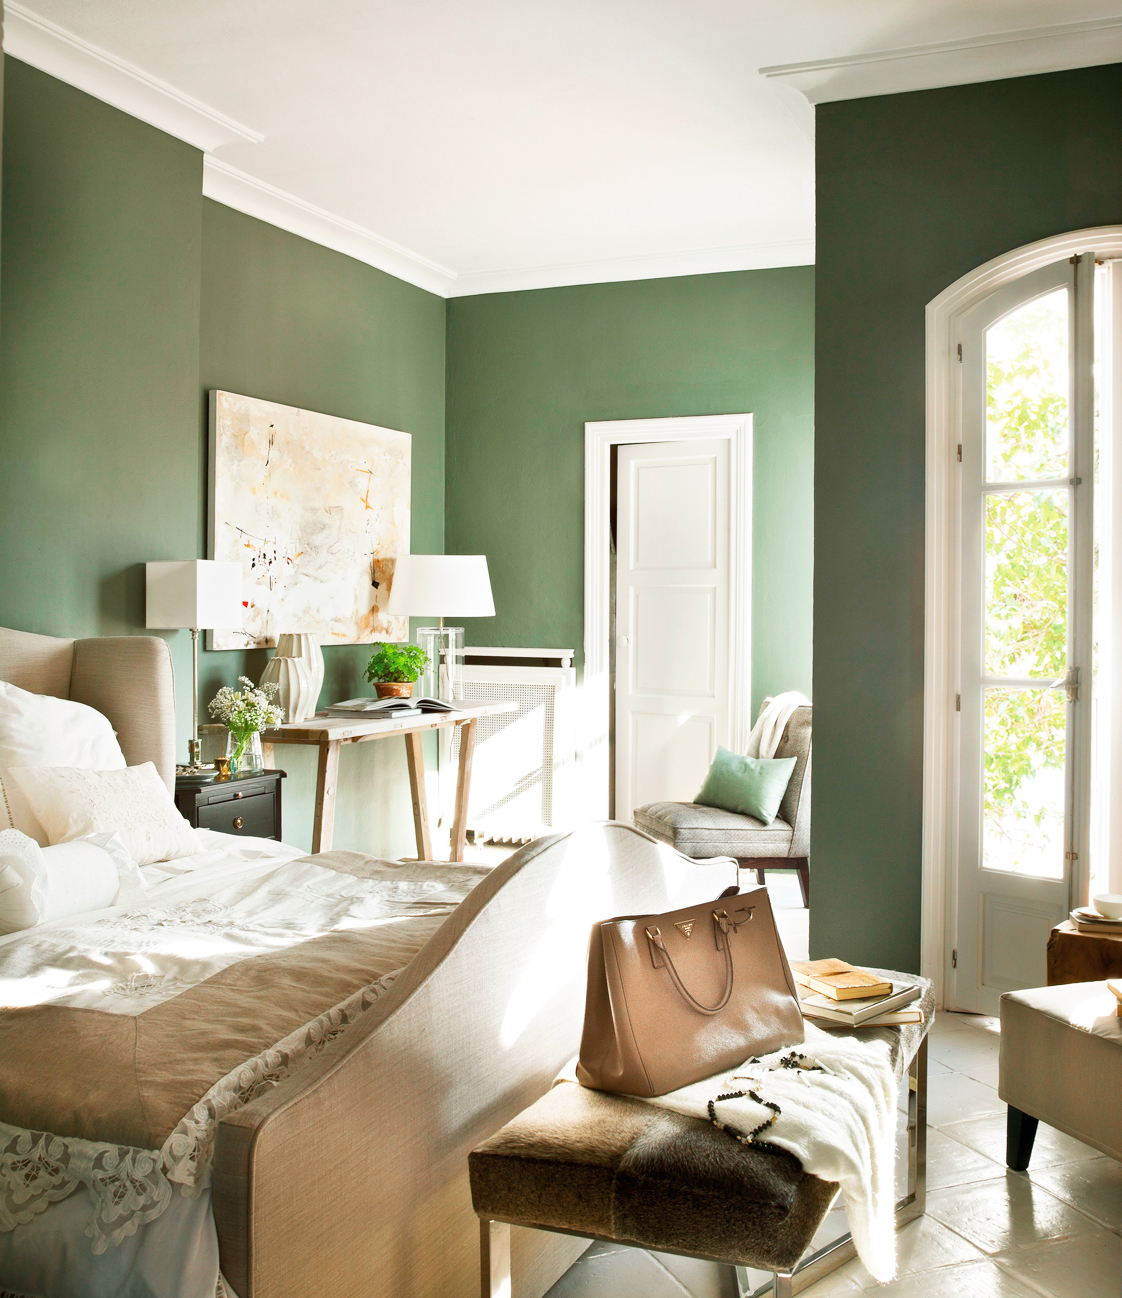 dormitorio pared verde